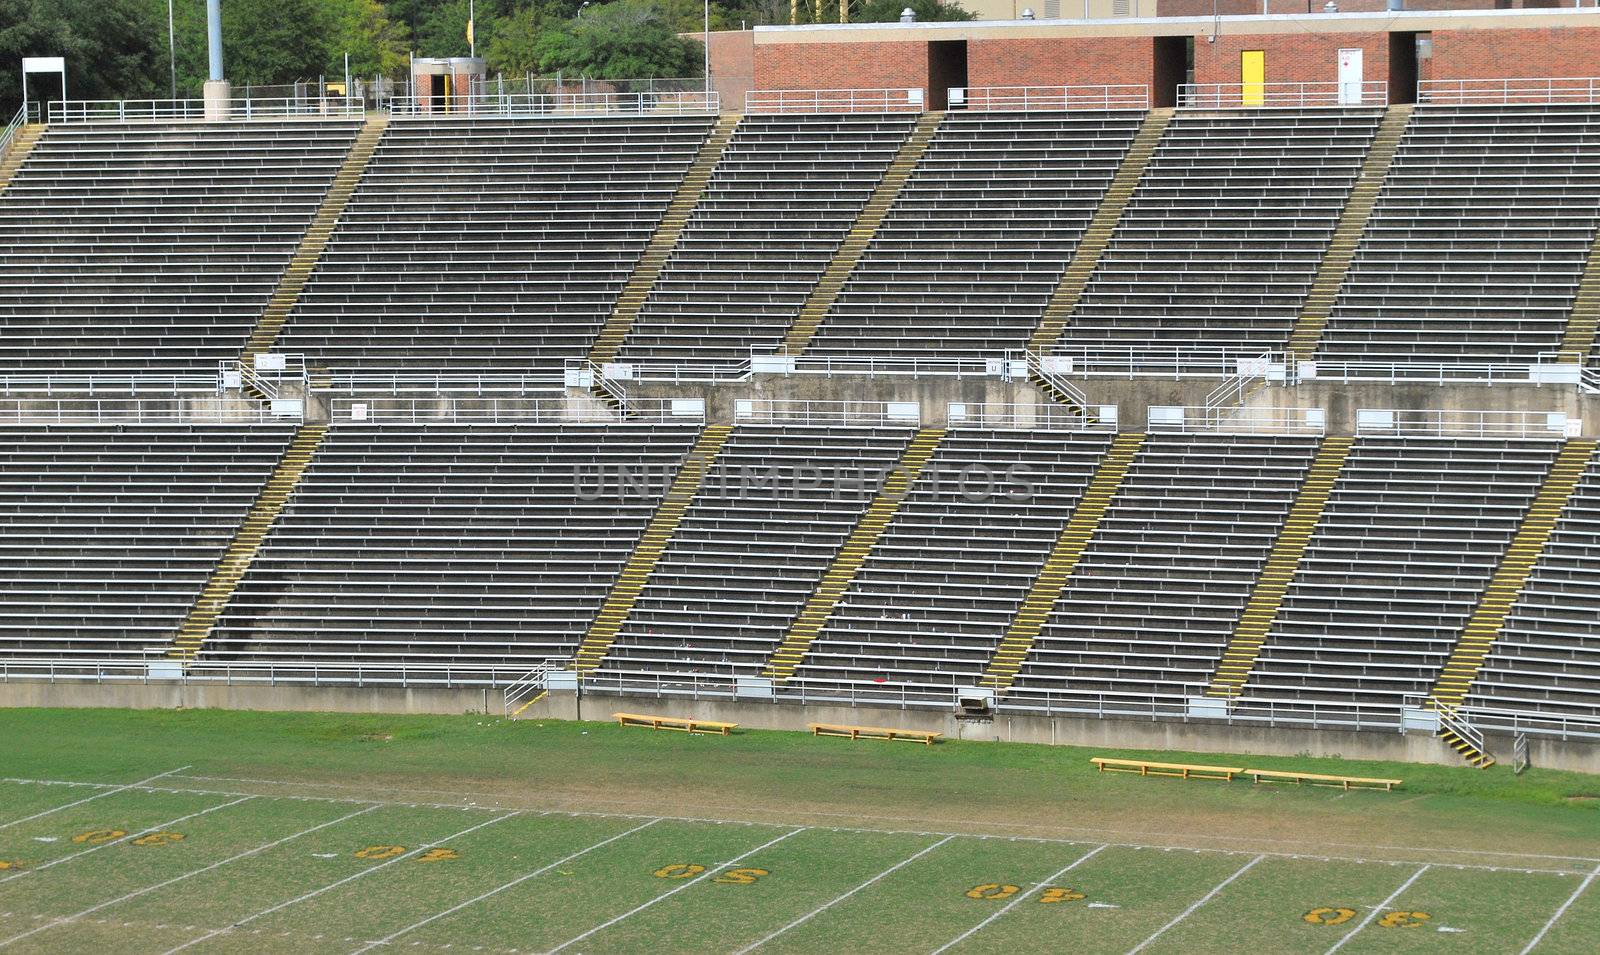 Football stadium totally empty.